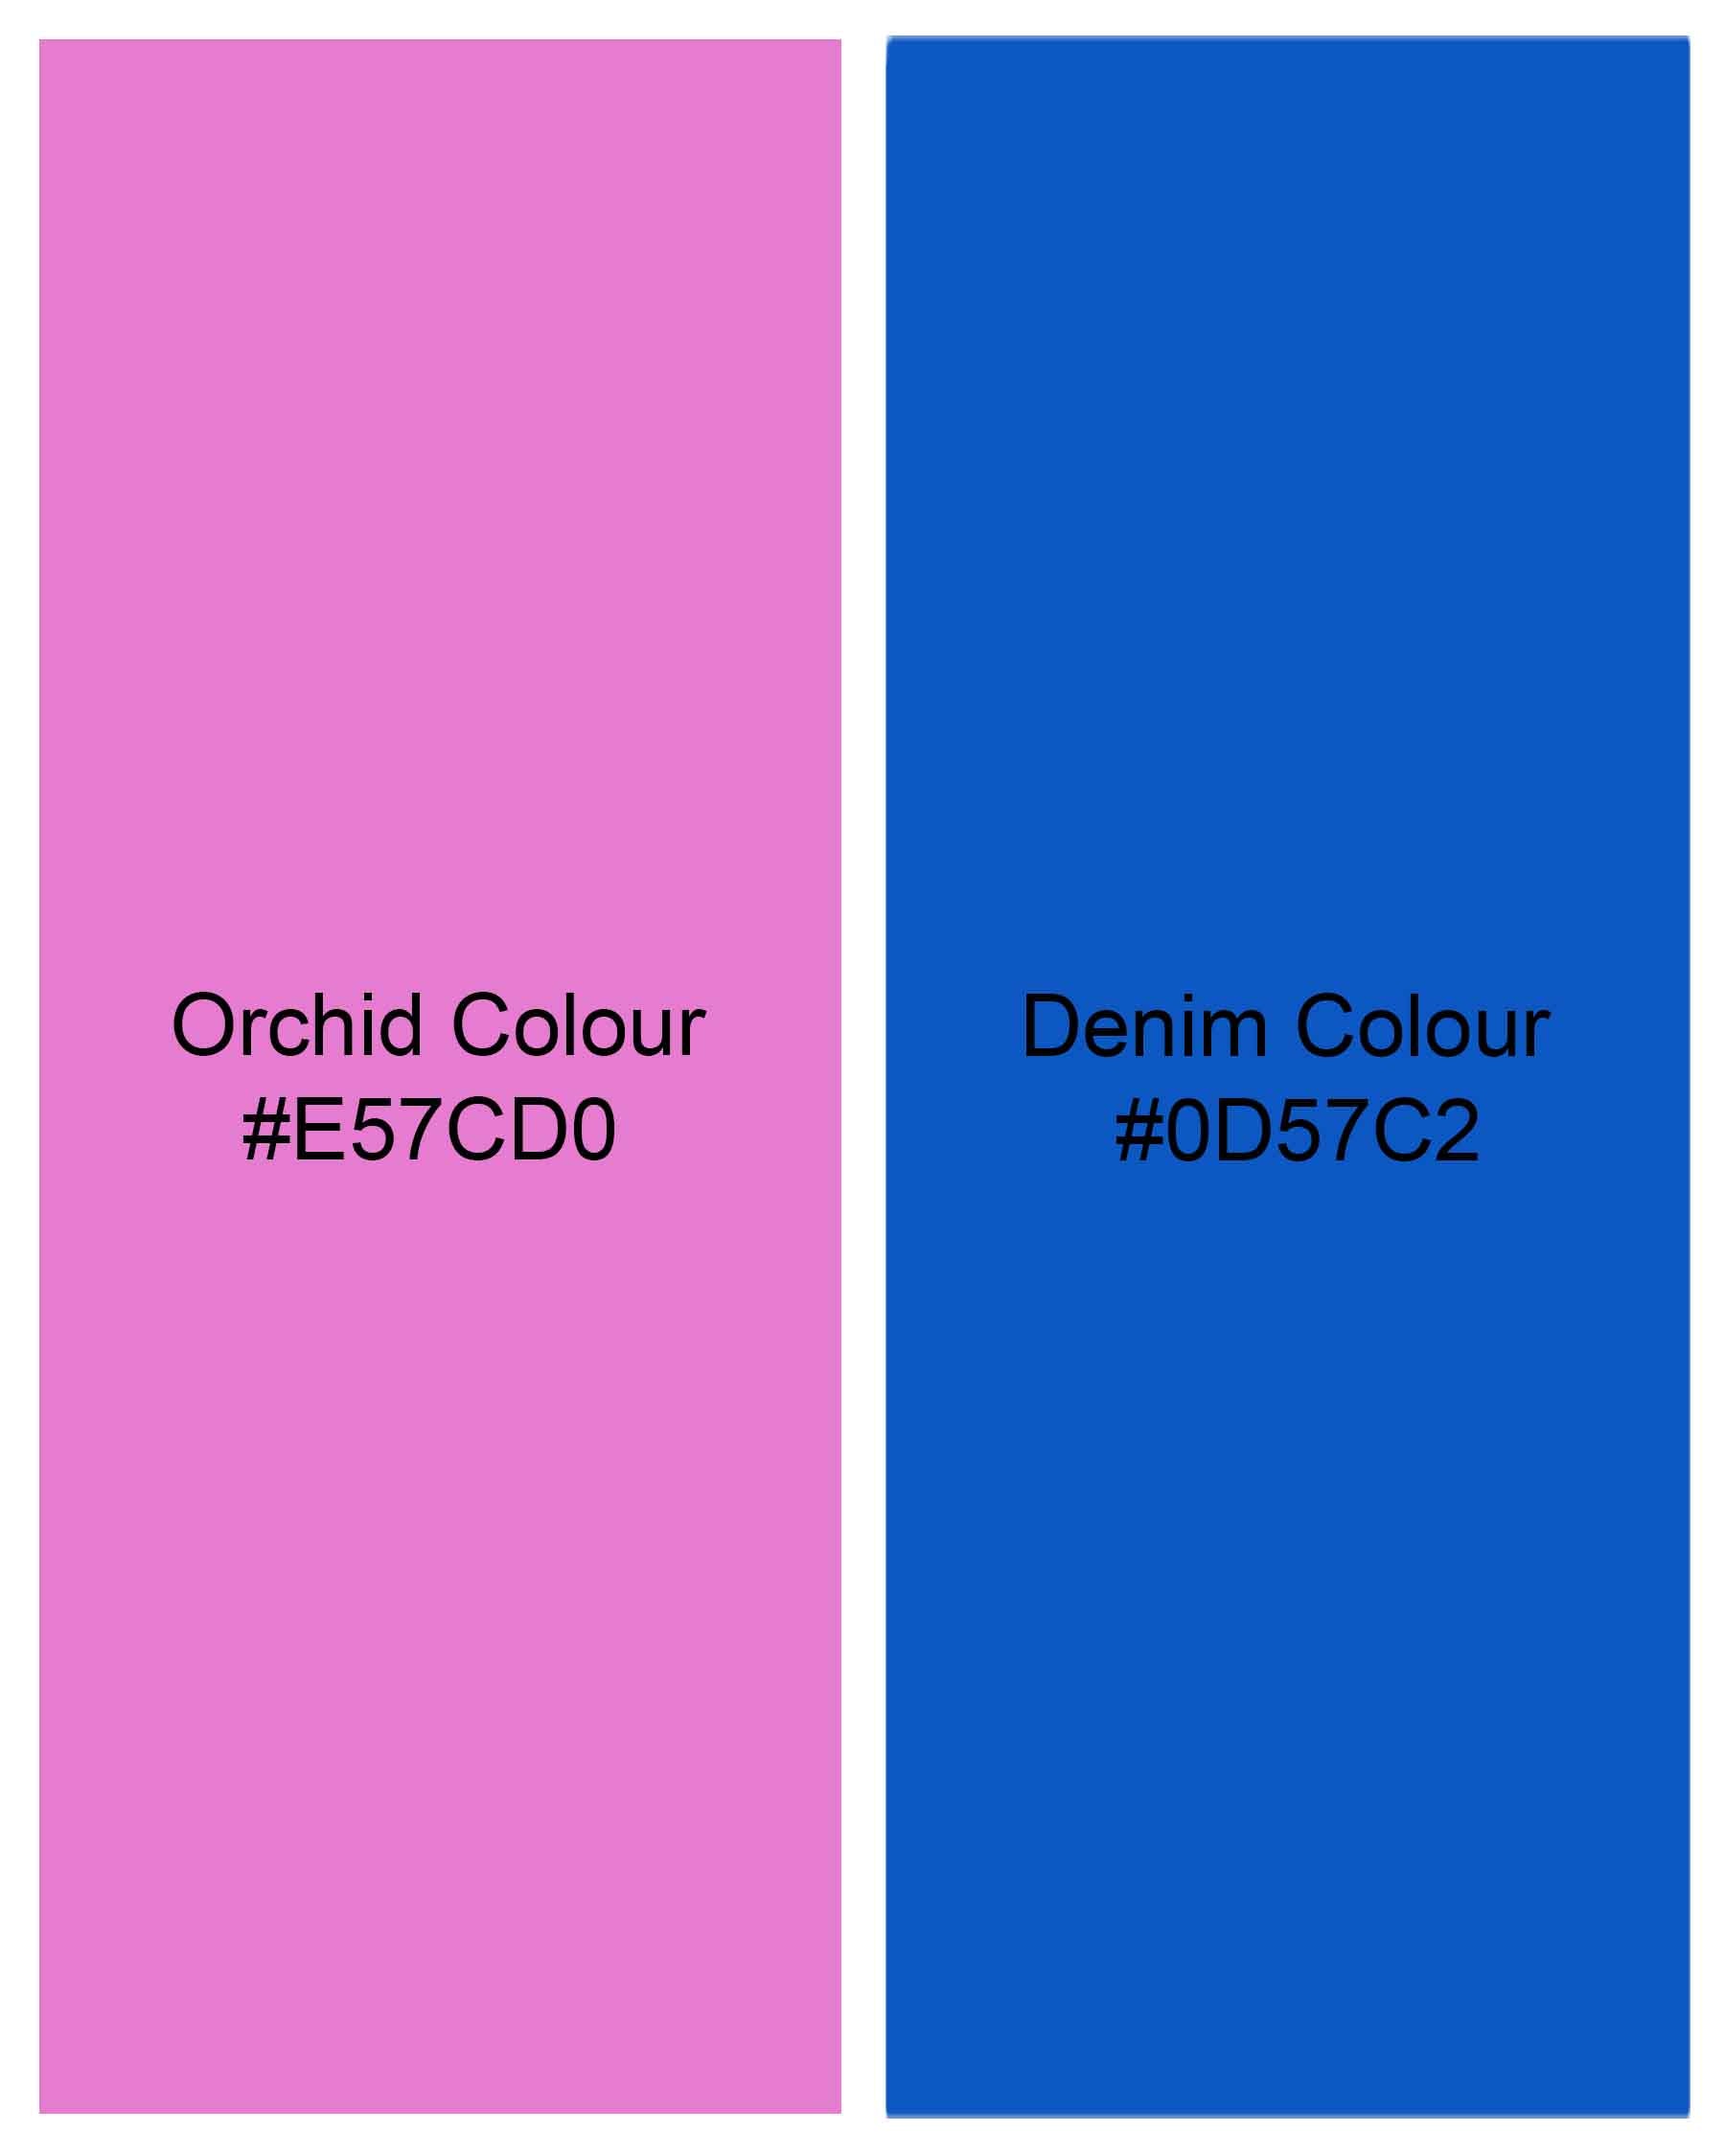 Orchid Pink with Denim Blue Dobby Textured Premium Giza Cotton Shirt 7994-BD-38, 7994-BD-H-38, 7994-BD-39, 7994-BD-H-39, 7994-BD-40, 7994-BD-H-40, 7994-BD-42, 7994-BD-H-42, 7994-BD-44, 7994-BD-H-44, 7994-BD-46, 7994-BD-H-46, 7994-BD-48, 7994-BD-H-48, 7994-BD-50, 7994-BD-H-50, 7994-BD-52, 7994-BD-H-52